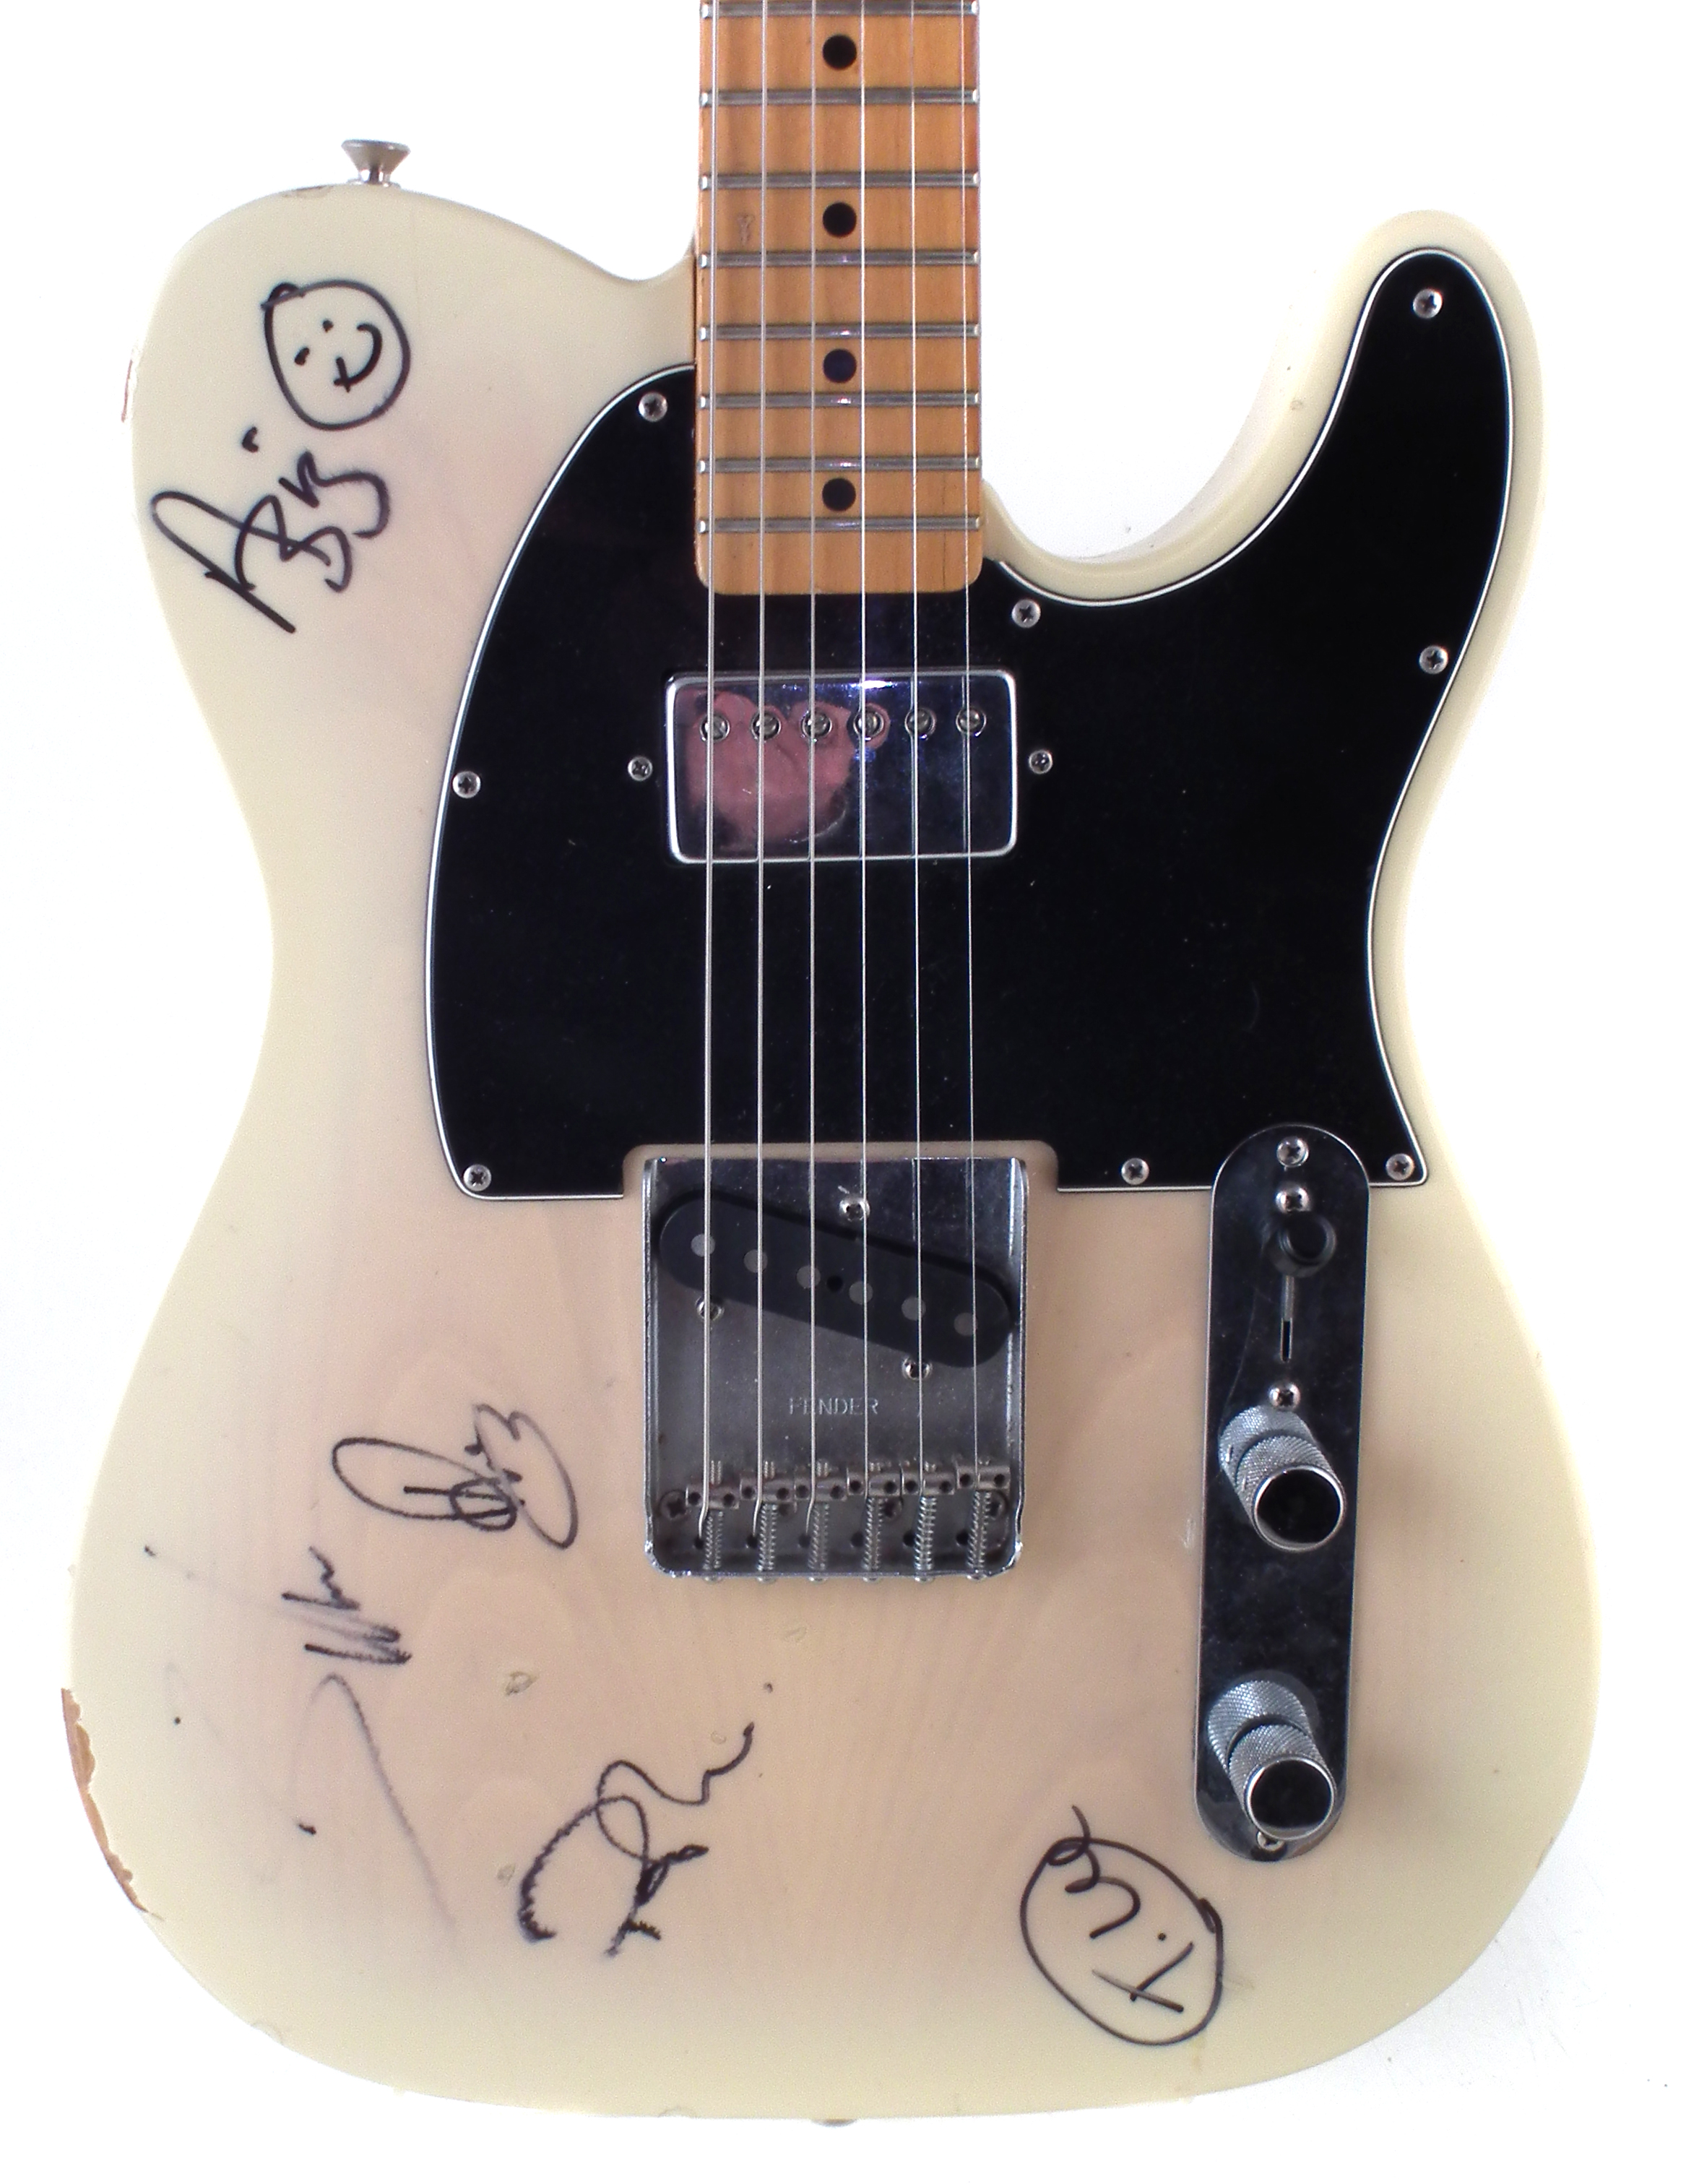 Fender telecaster signed by Aziz Ibrahim (Simply Red / Stone Roses) Patrick Eggle, Simon Mcbride,